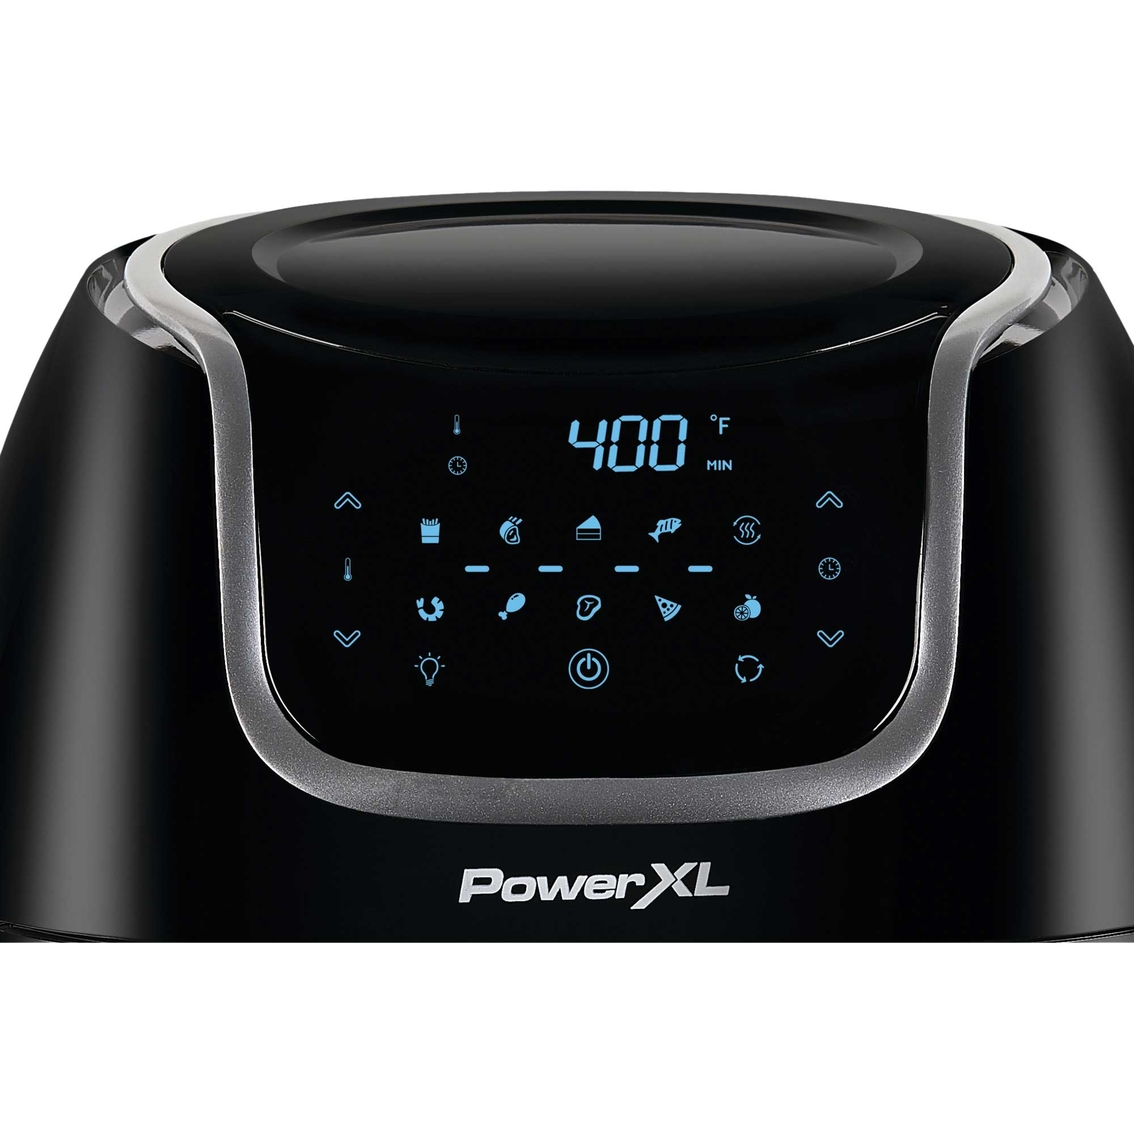 10-Qt. Power XL Vortex Air Fryer Pro